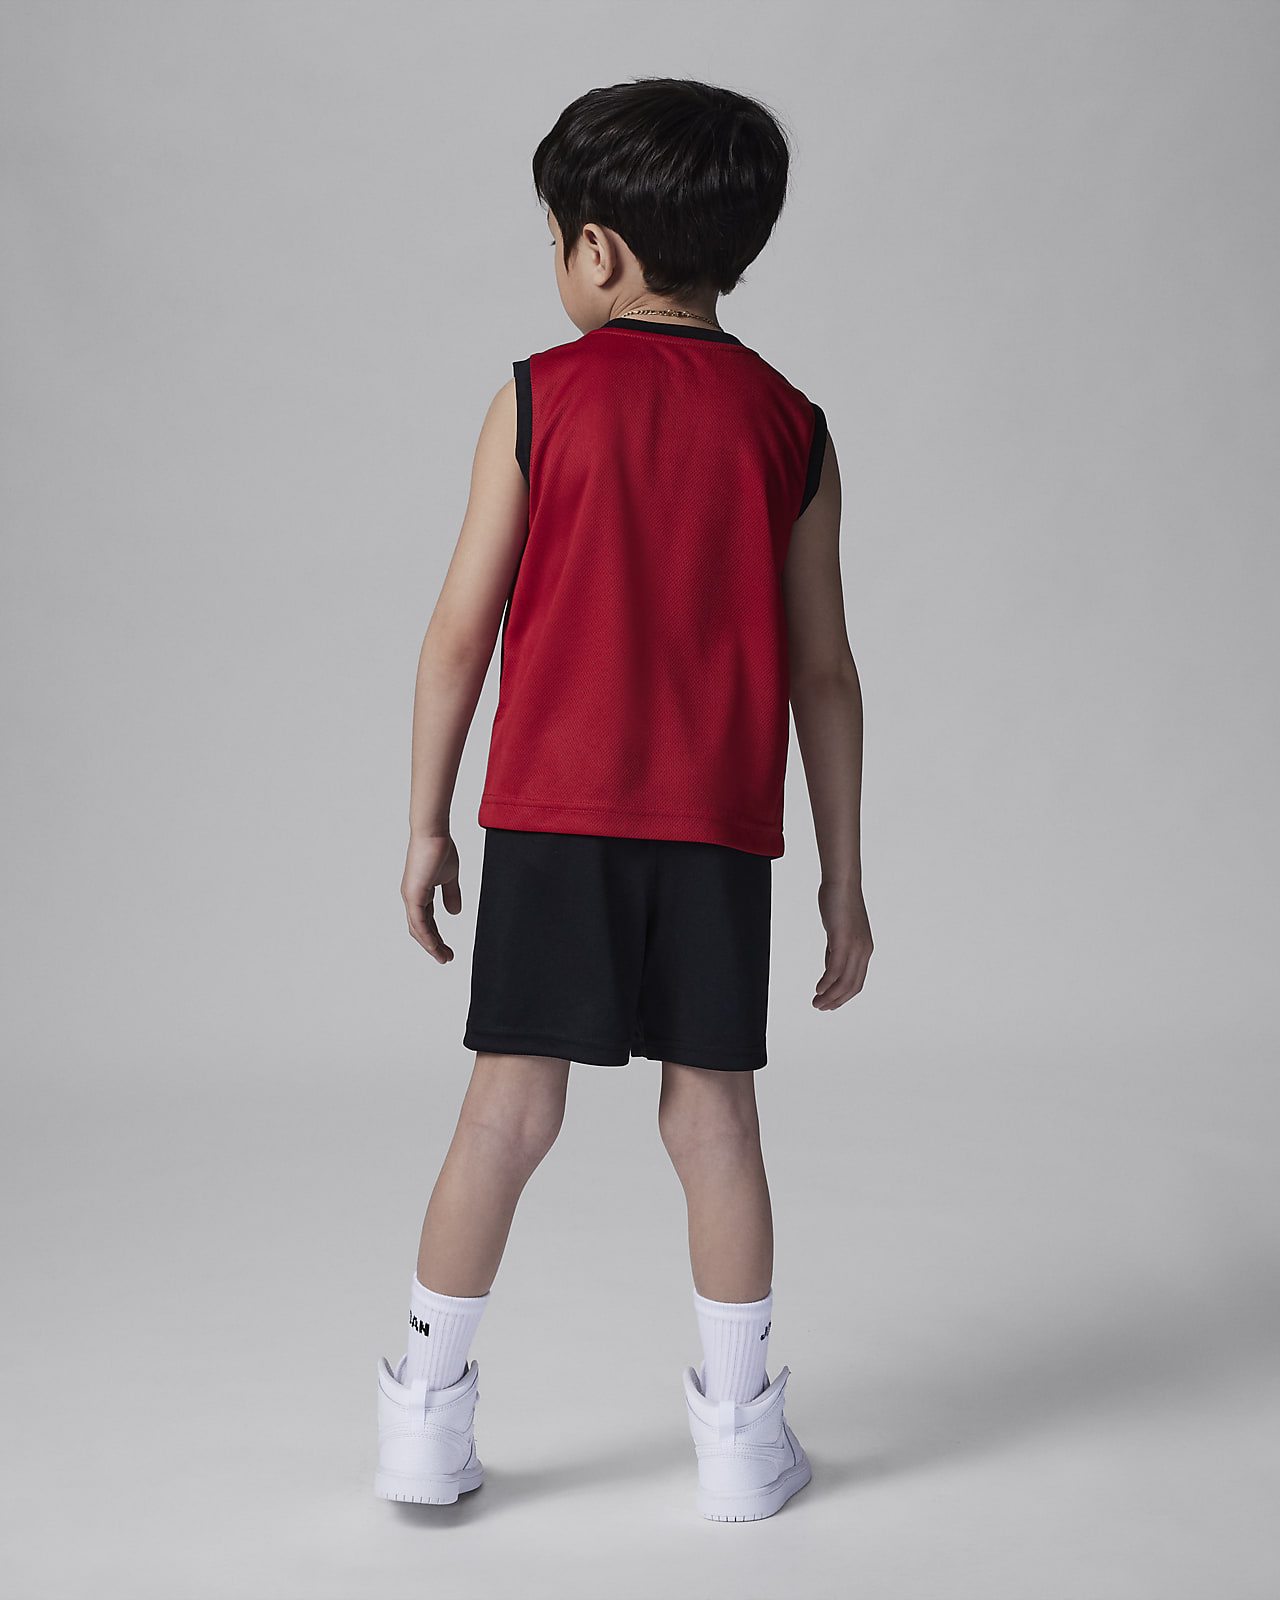 Jordan Nike Little Boys' Tank Top and Short Set (Red Print/Black Shorts, 6)  : : Clothing, Shoes & Accessories